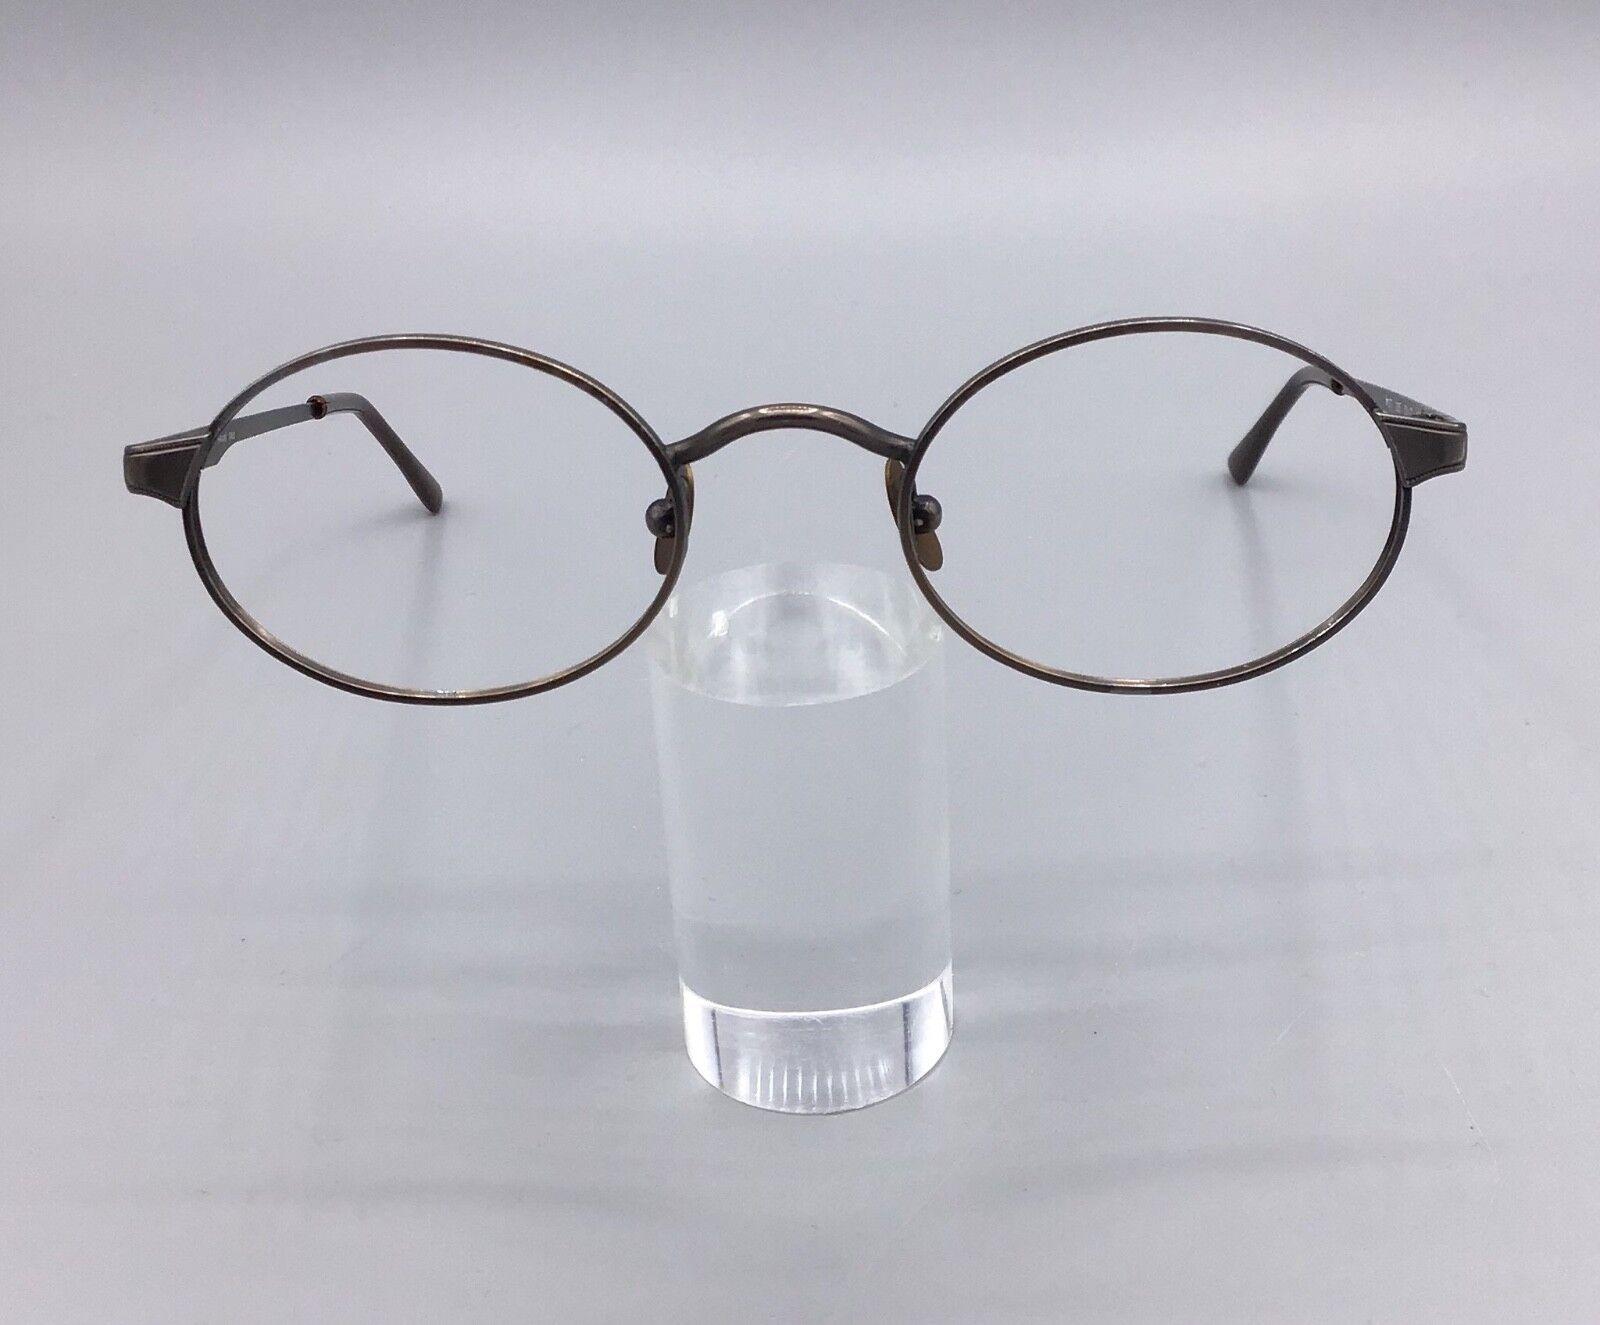 Byblos occhiale vintage Eyewear frame brillen lunettes frame Italy